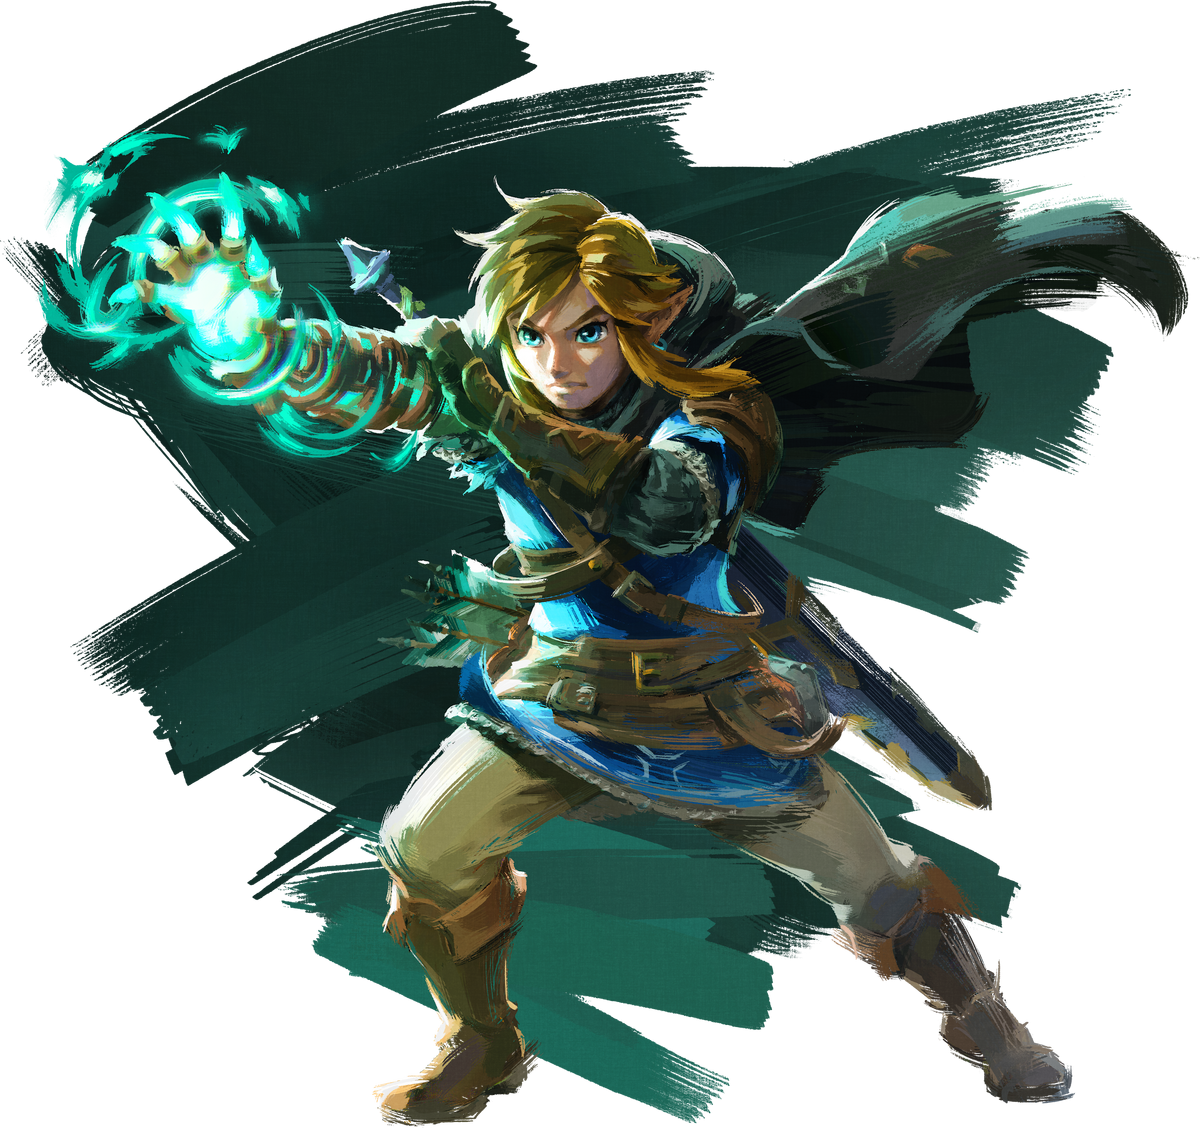 The Legend of Zelda: Tears of the Kingdom - Wikipedia